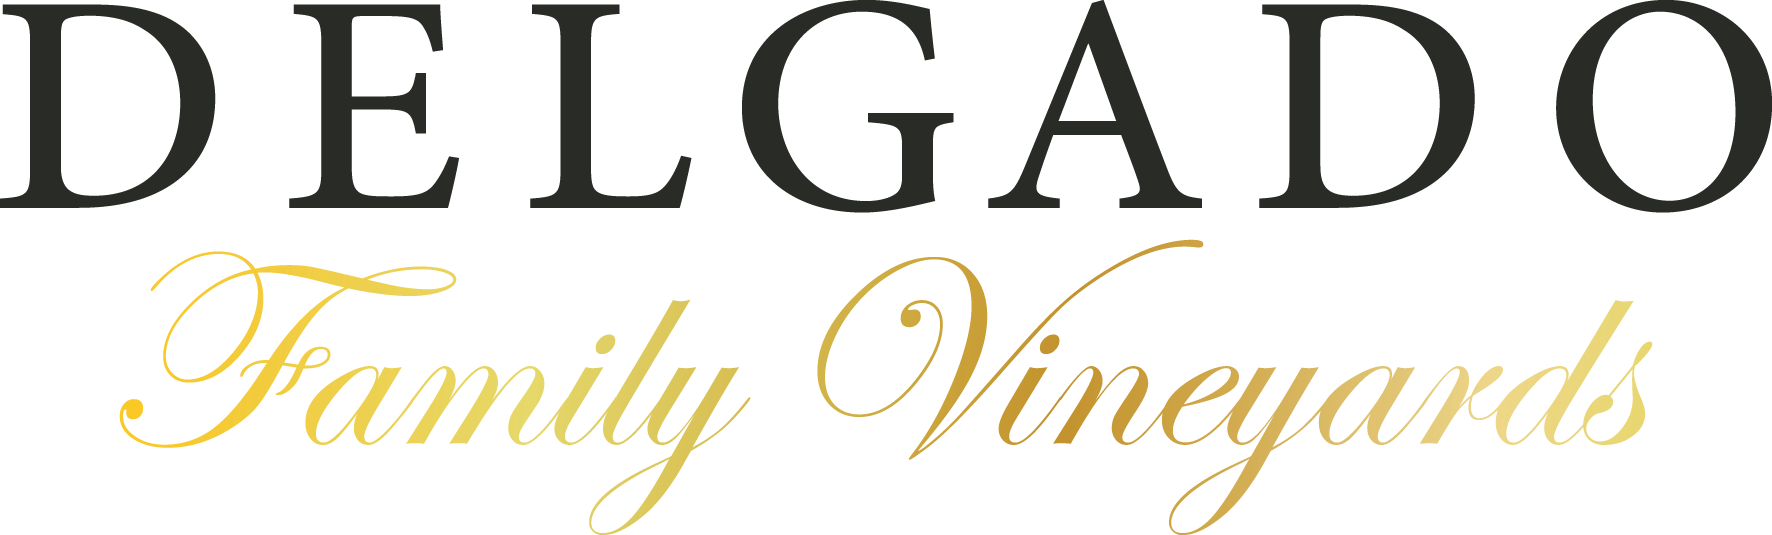 Delgado Family vineyards